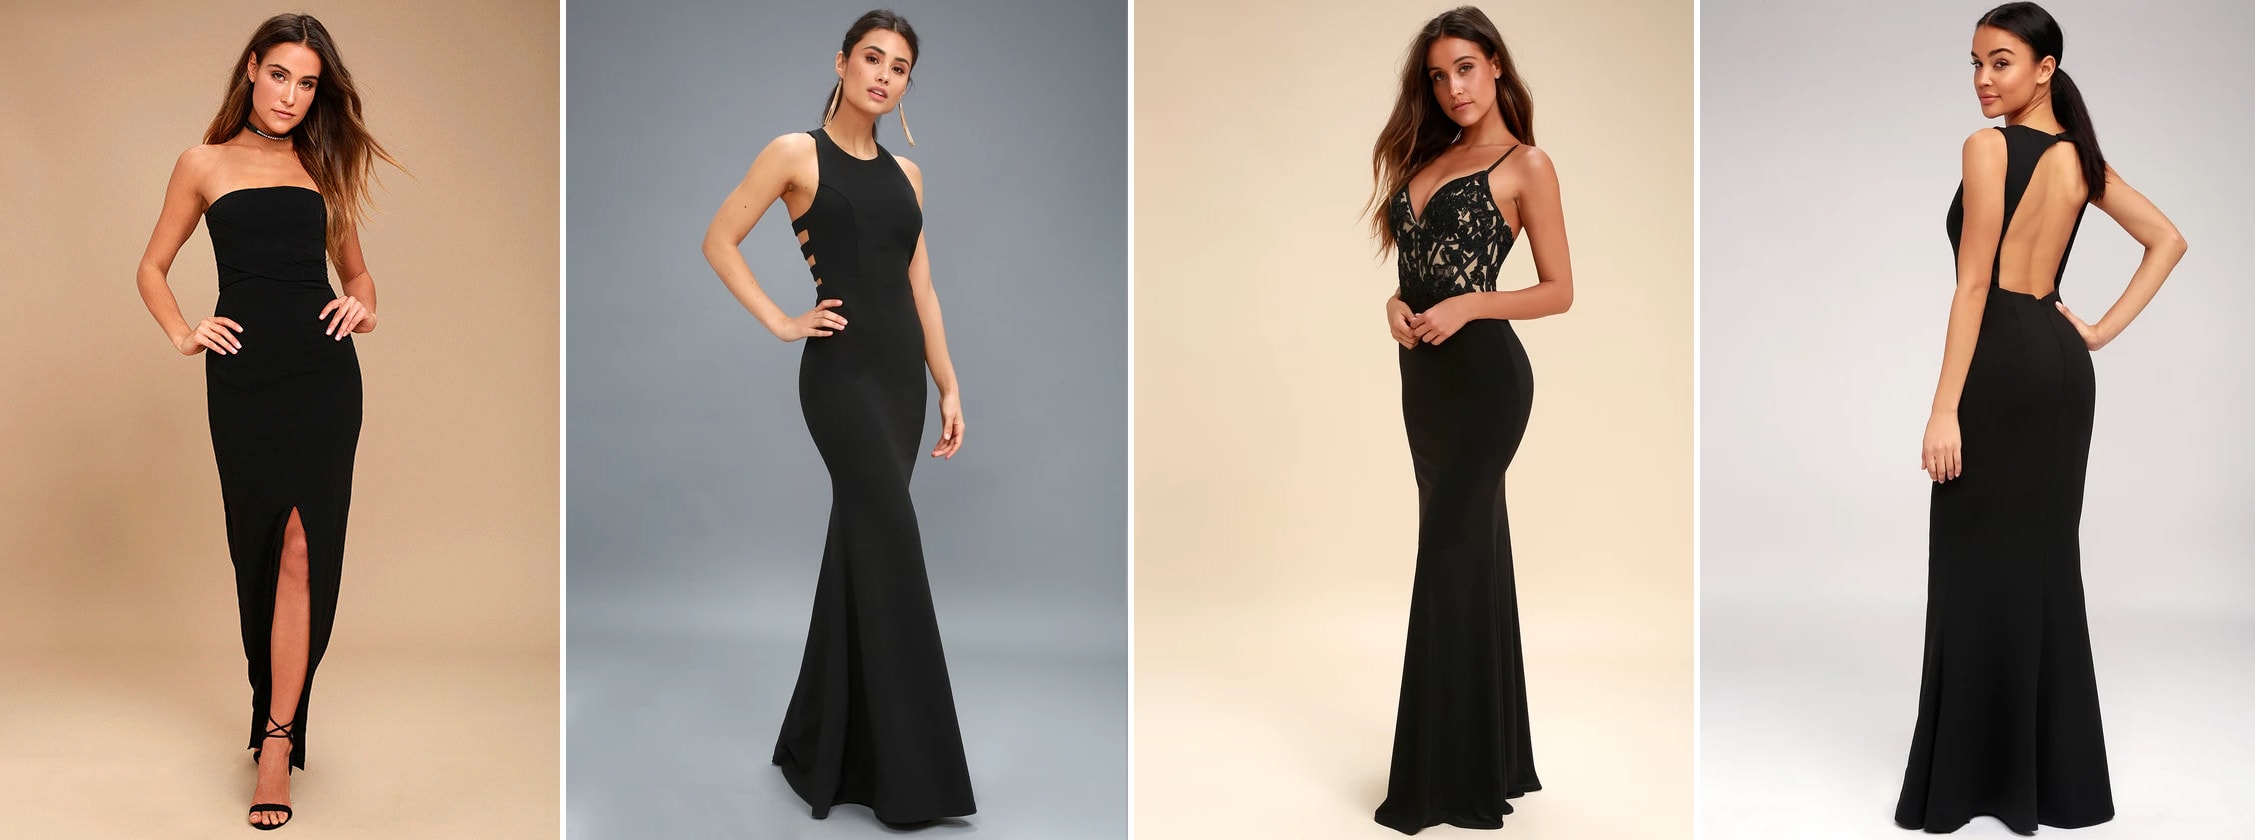 Prom Dresses We Love for 2018 - Lulus.com Fashion Blog